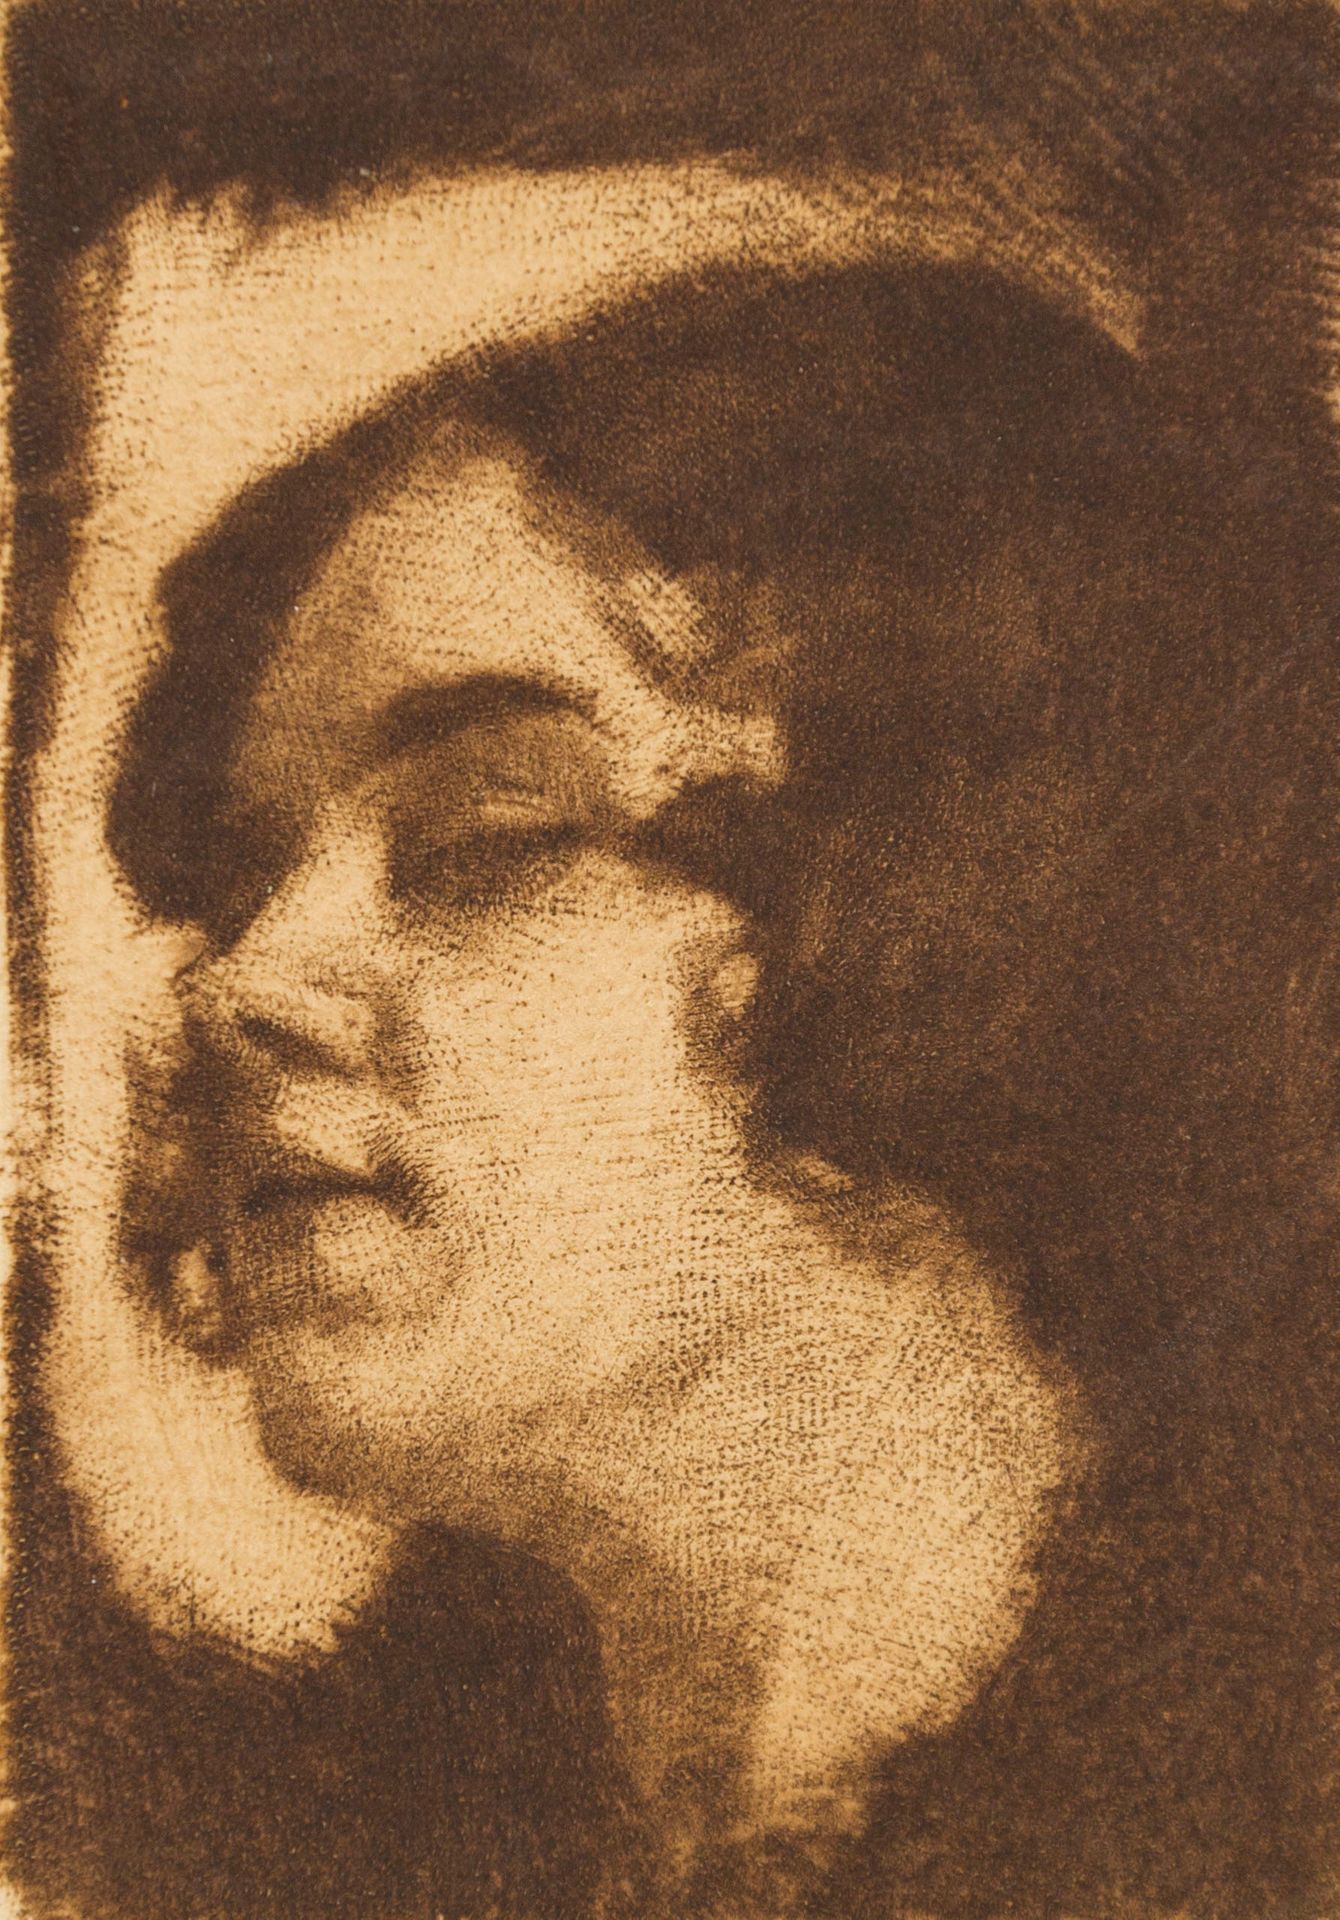 Orlik, Emil 奥利克，埃米尔（1870-1932）。一个女人的画像。蚀刻版画，维尼士图案。手工制作的纸张。8,5:6 (21,5:15,2) 厘米。
&hellip;